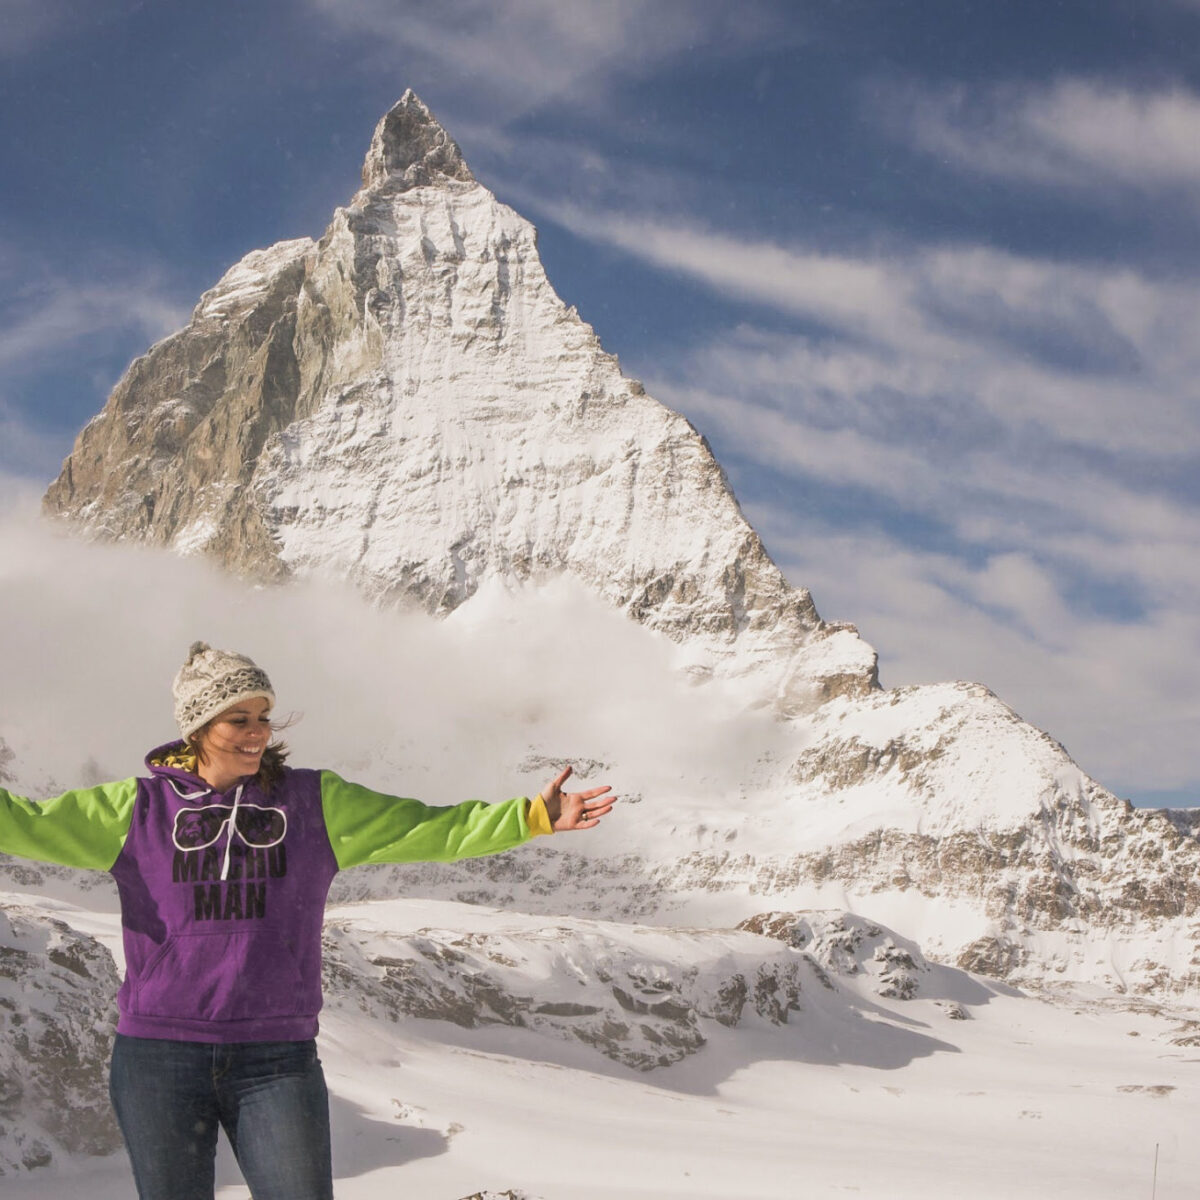 How to see the Matterhorn